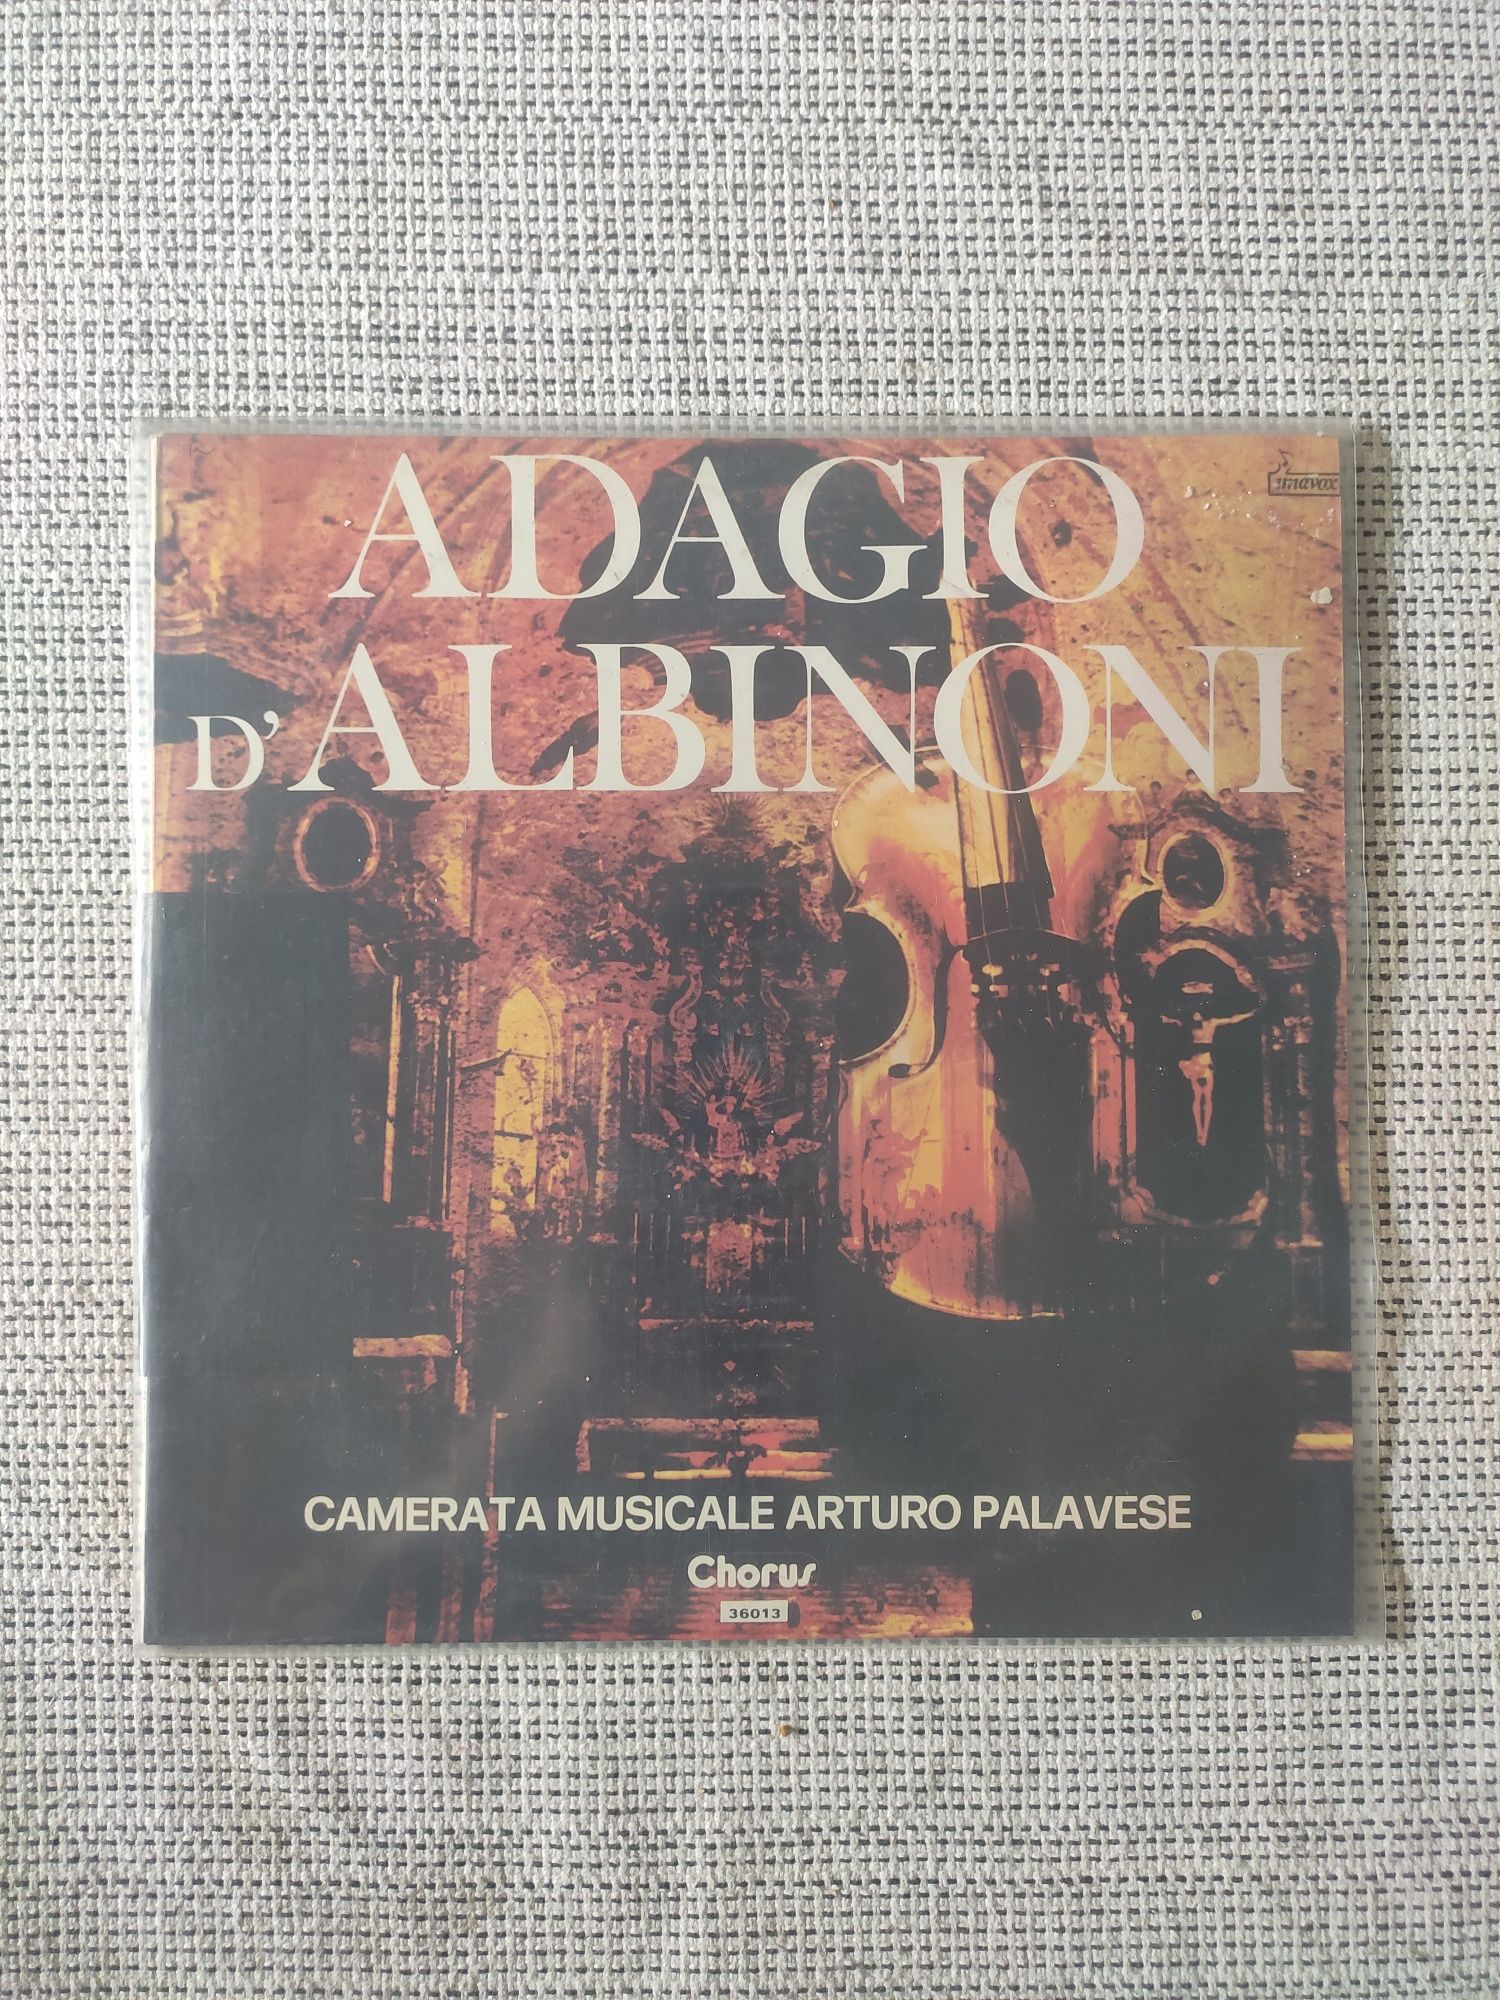 Vinil - Adagio d'Albinoni

CAMERATA MUSICALE ARTURO PALAVESE

Chorus 3